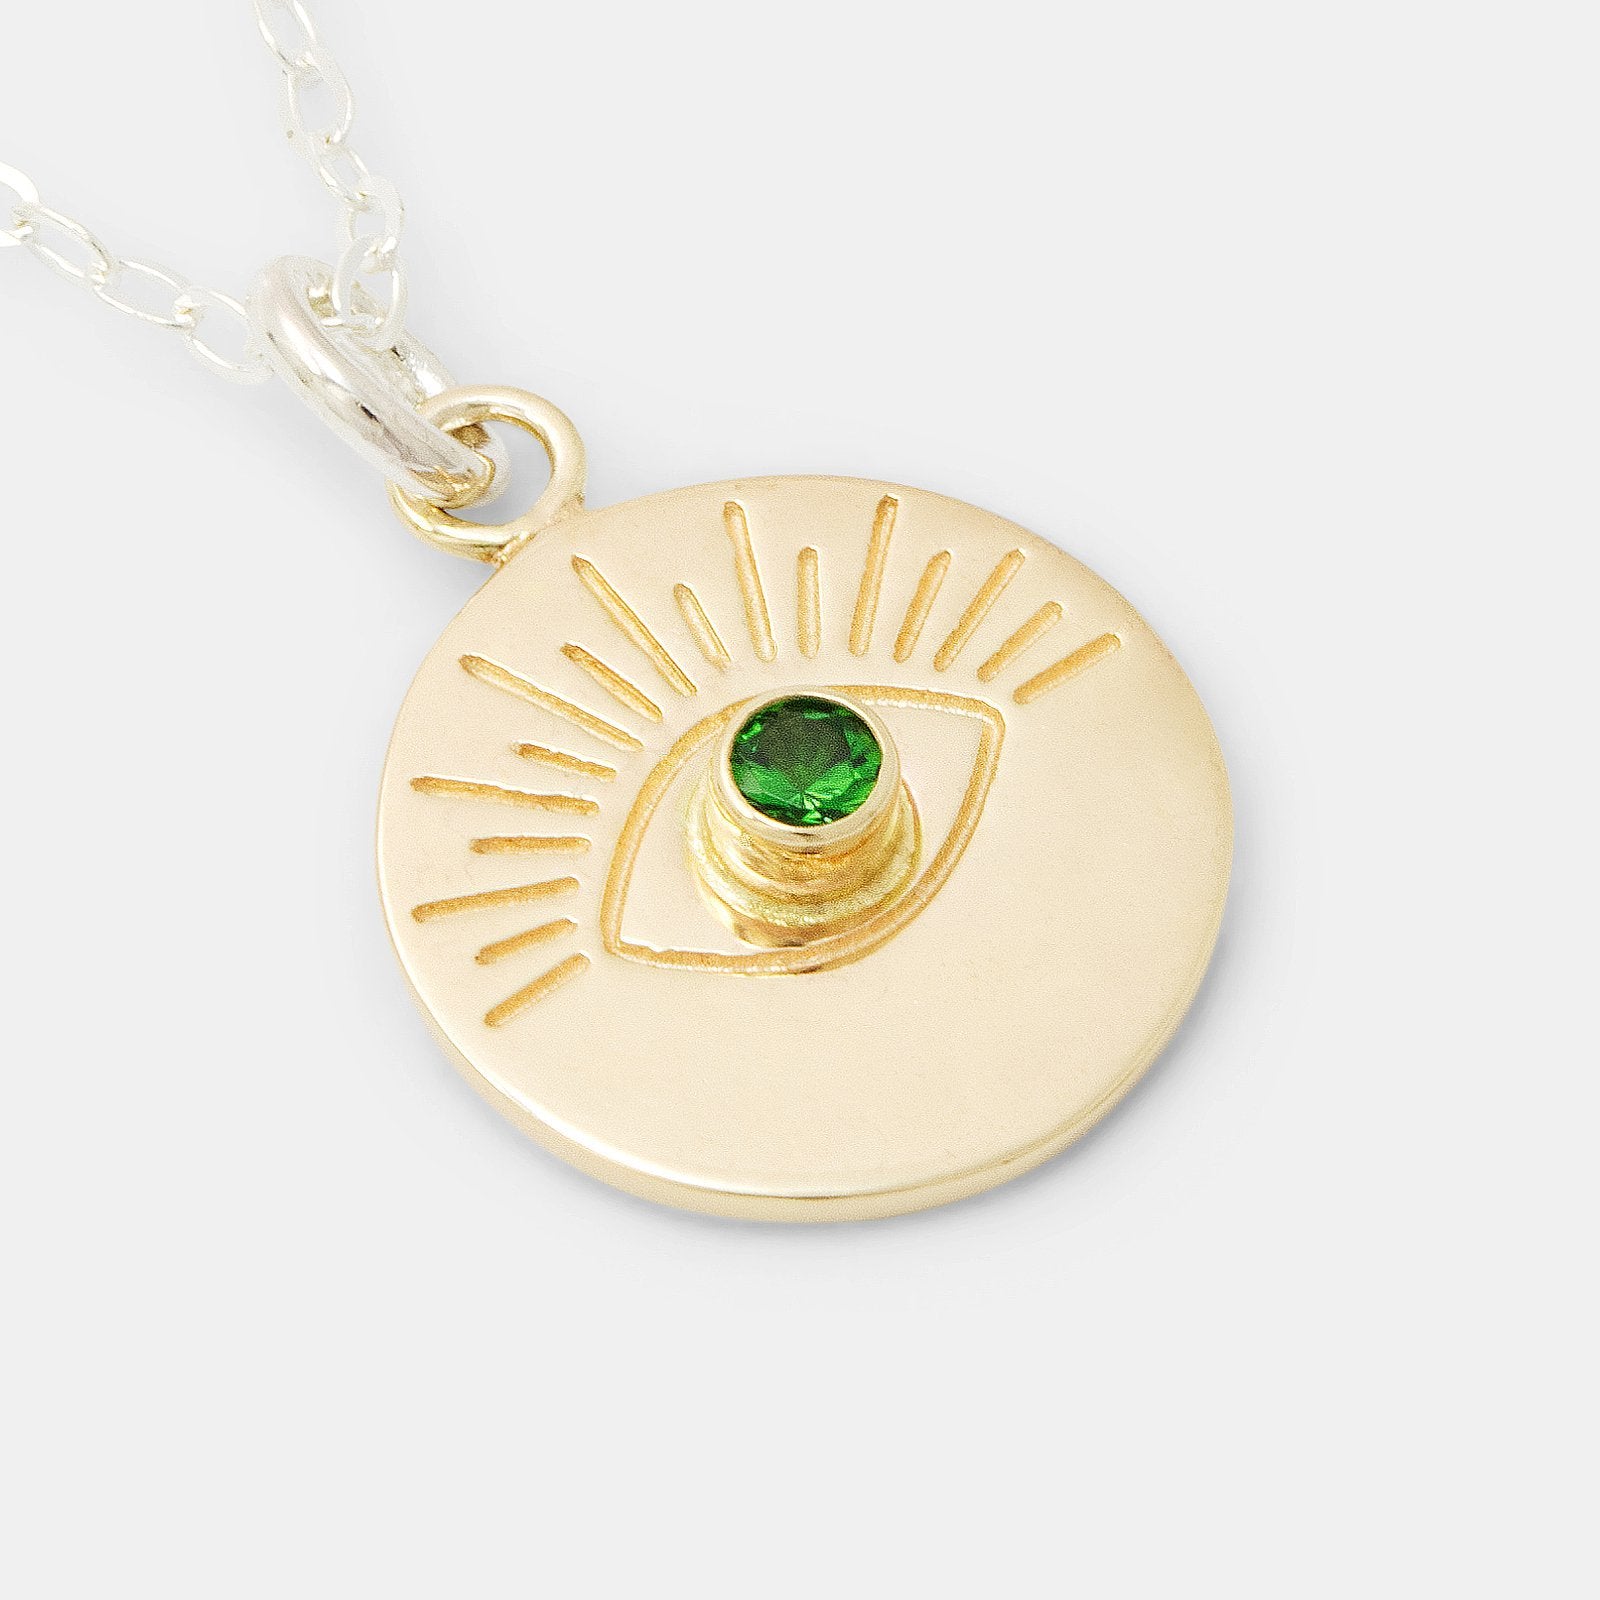 Eye & tsavorite solid gold amulet necklace - Simone Walsh Jewellery Australia